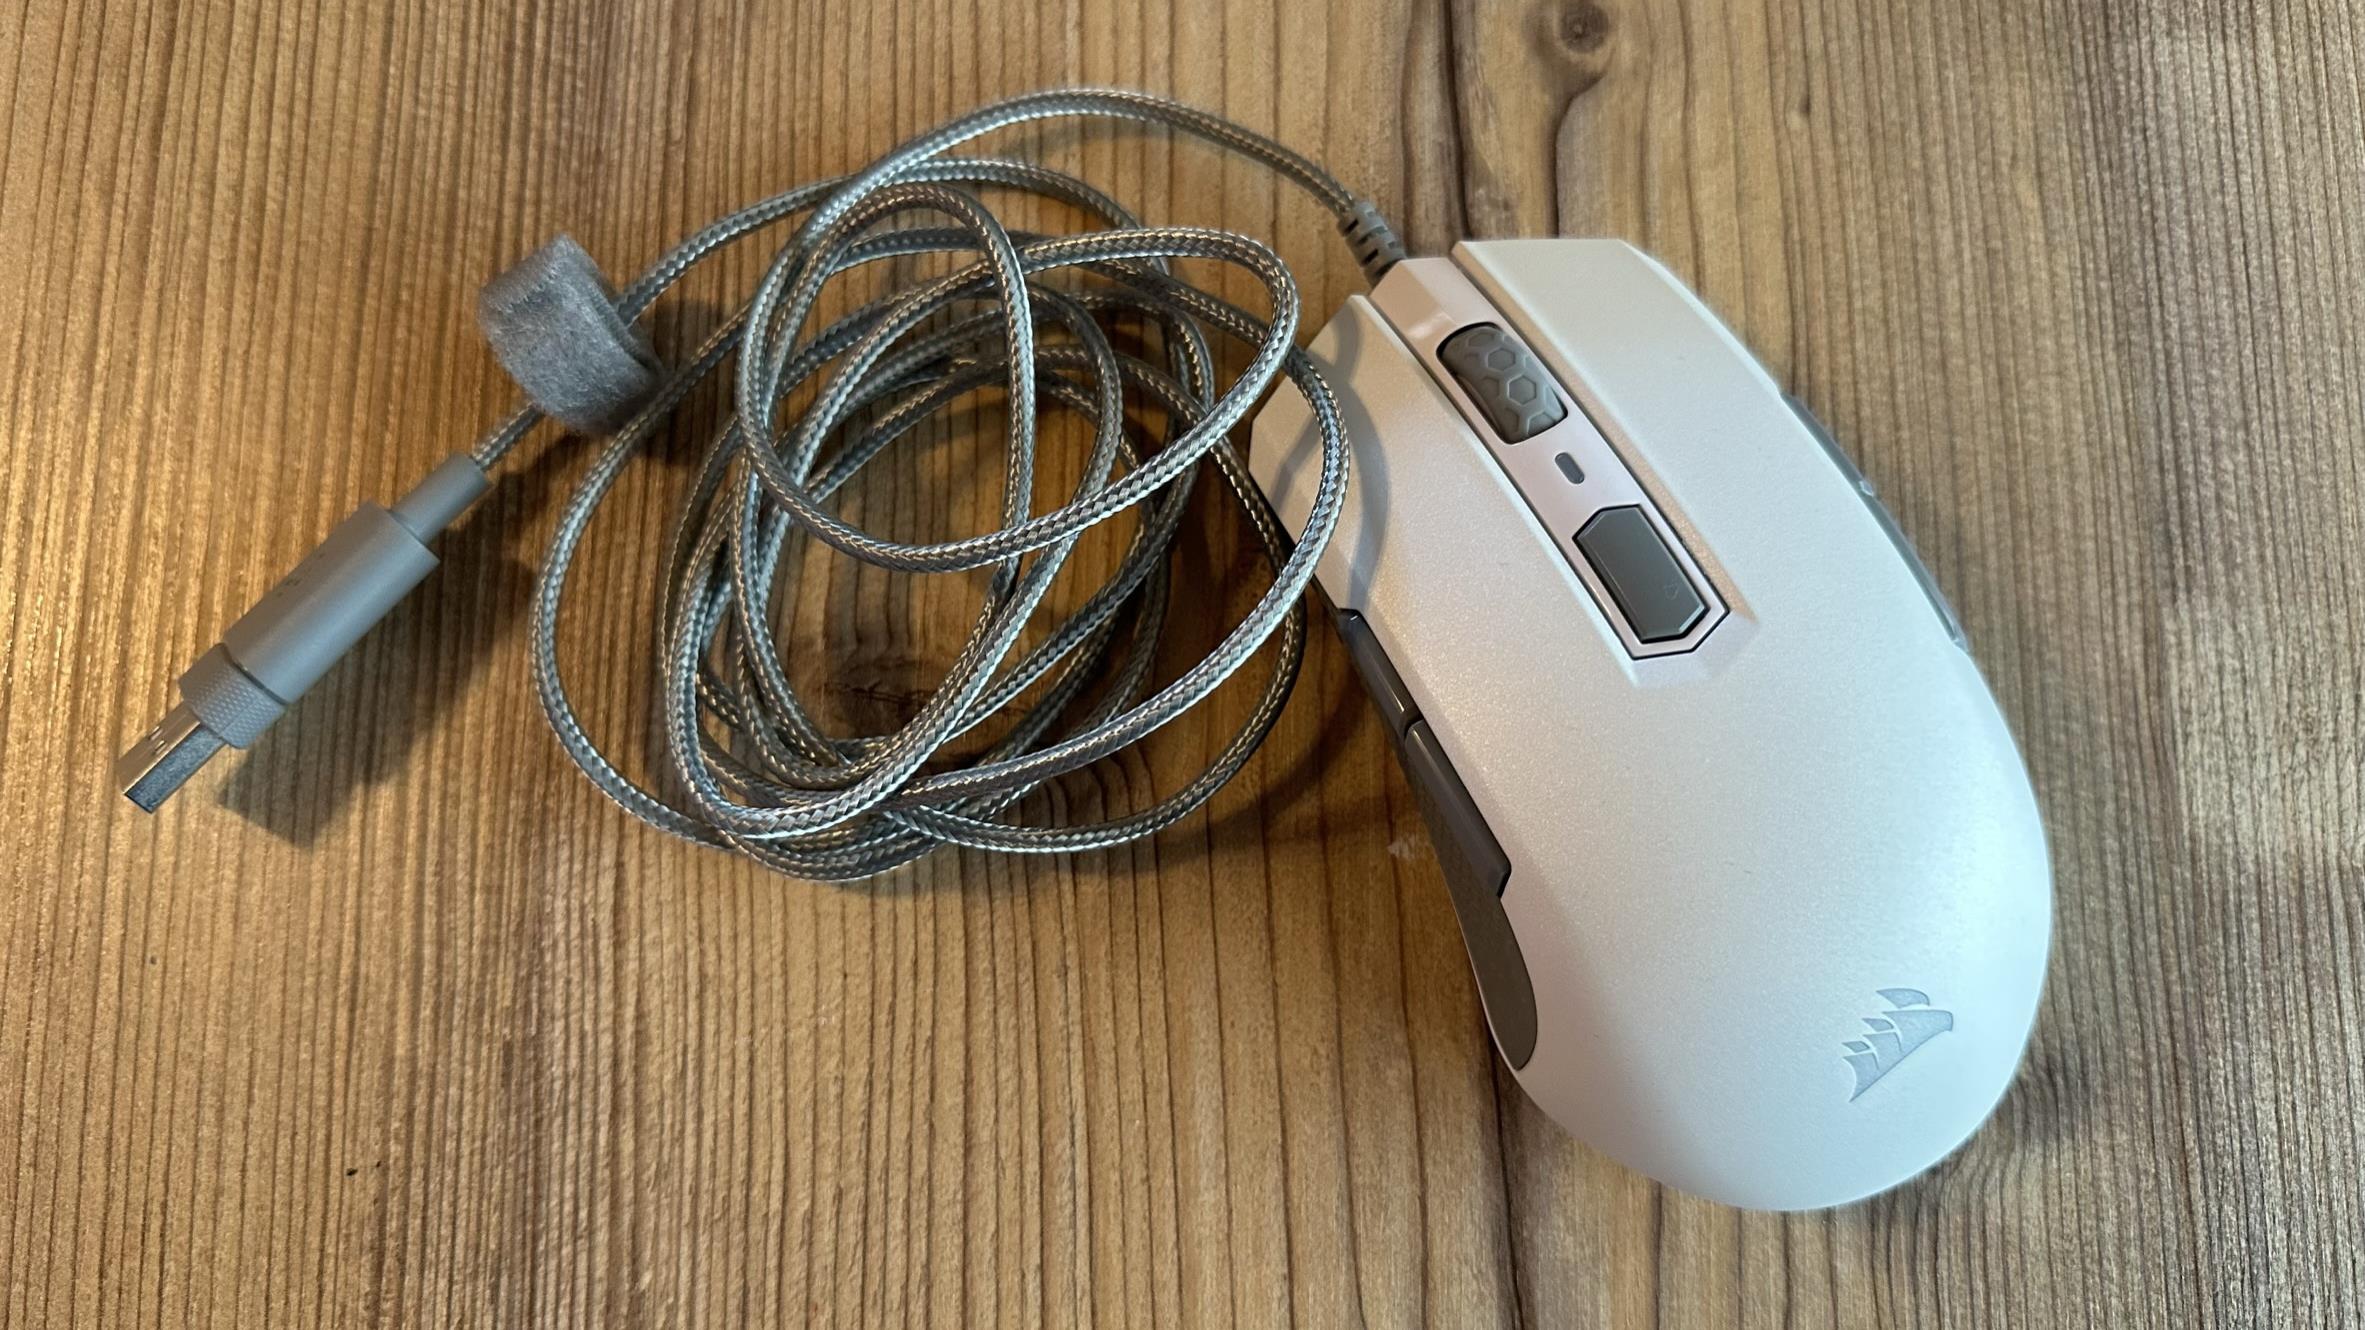 SATILIK - Corsair M55 RGB Pro Oyuncu Mouse | DonanımHaber Forum